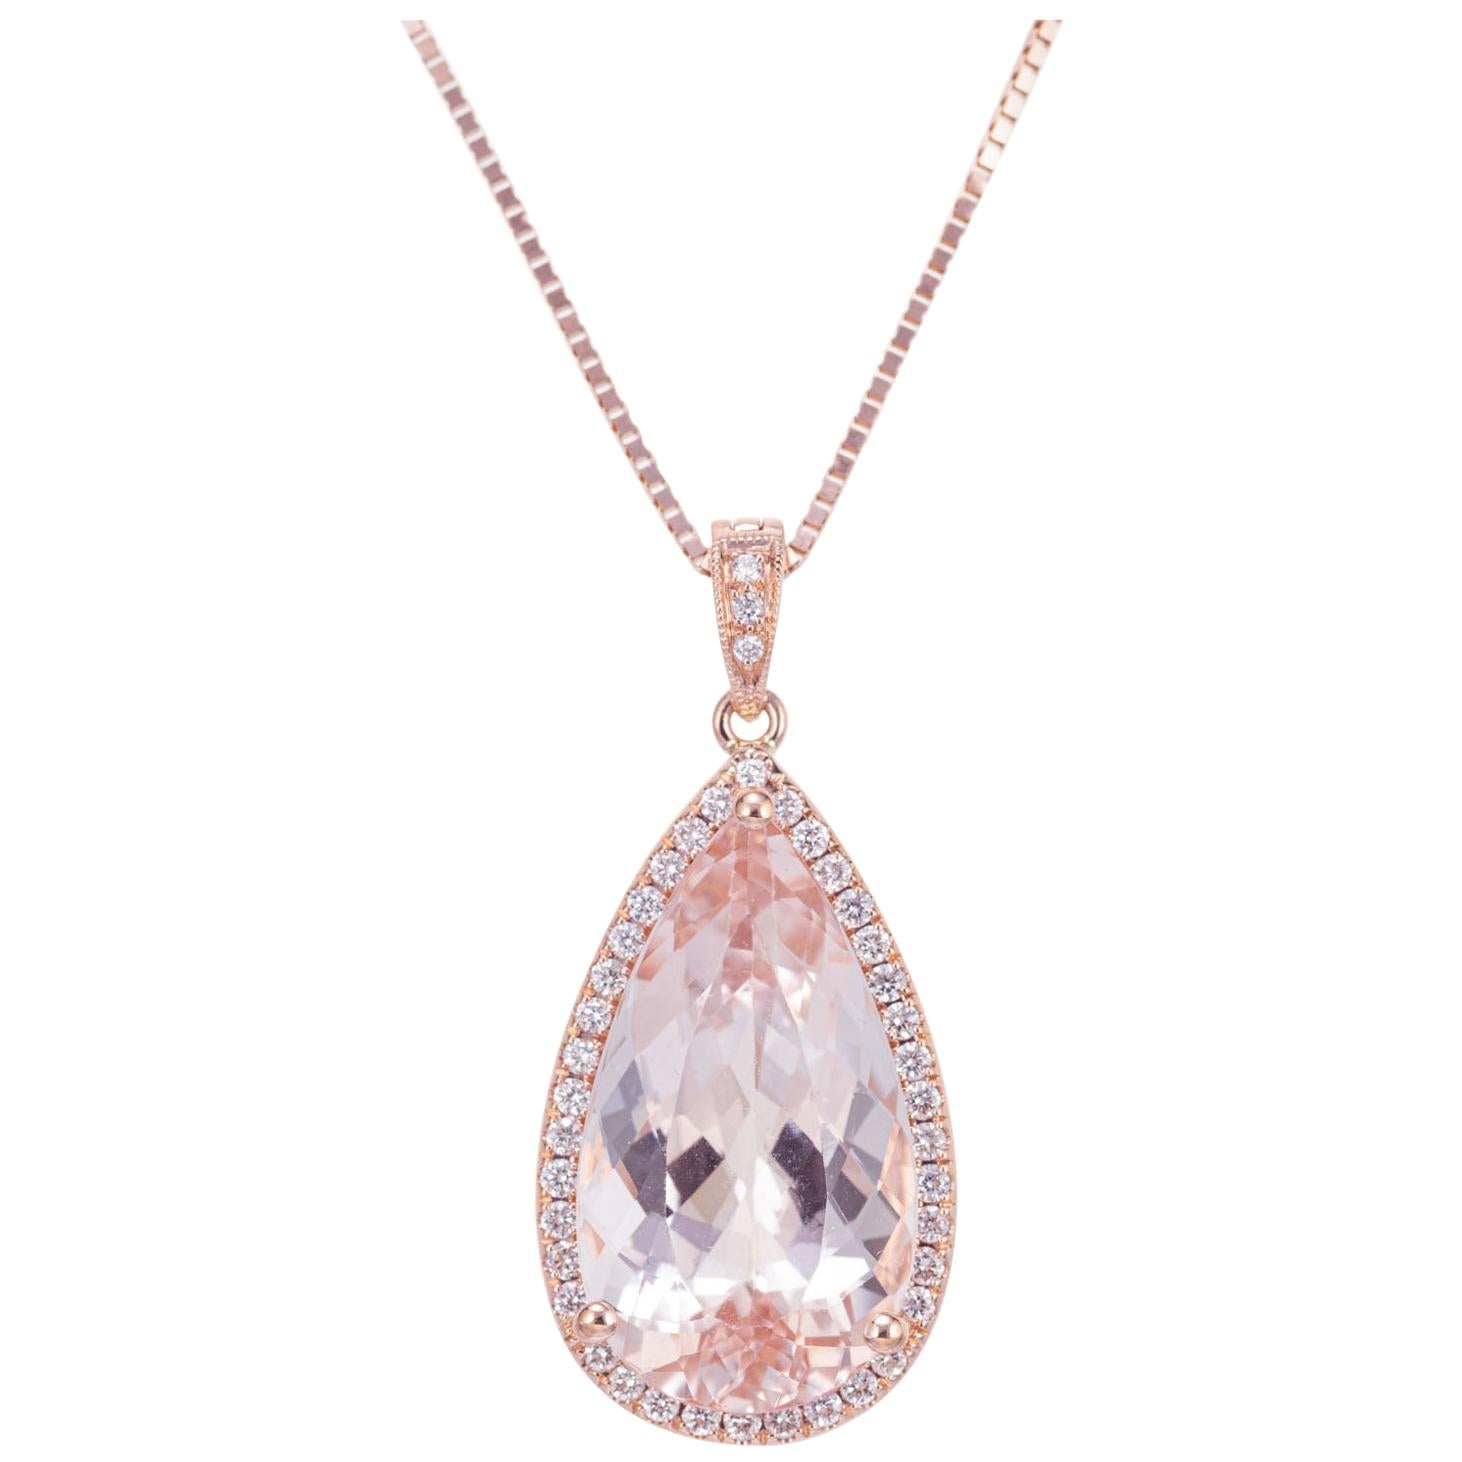 Peter Suchy Collier pendentif en or rose avec halo de diamants et morganite de 8,56 carats